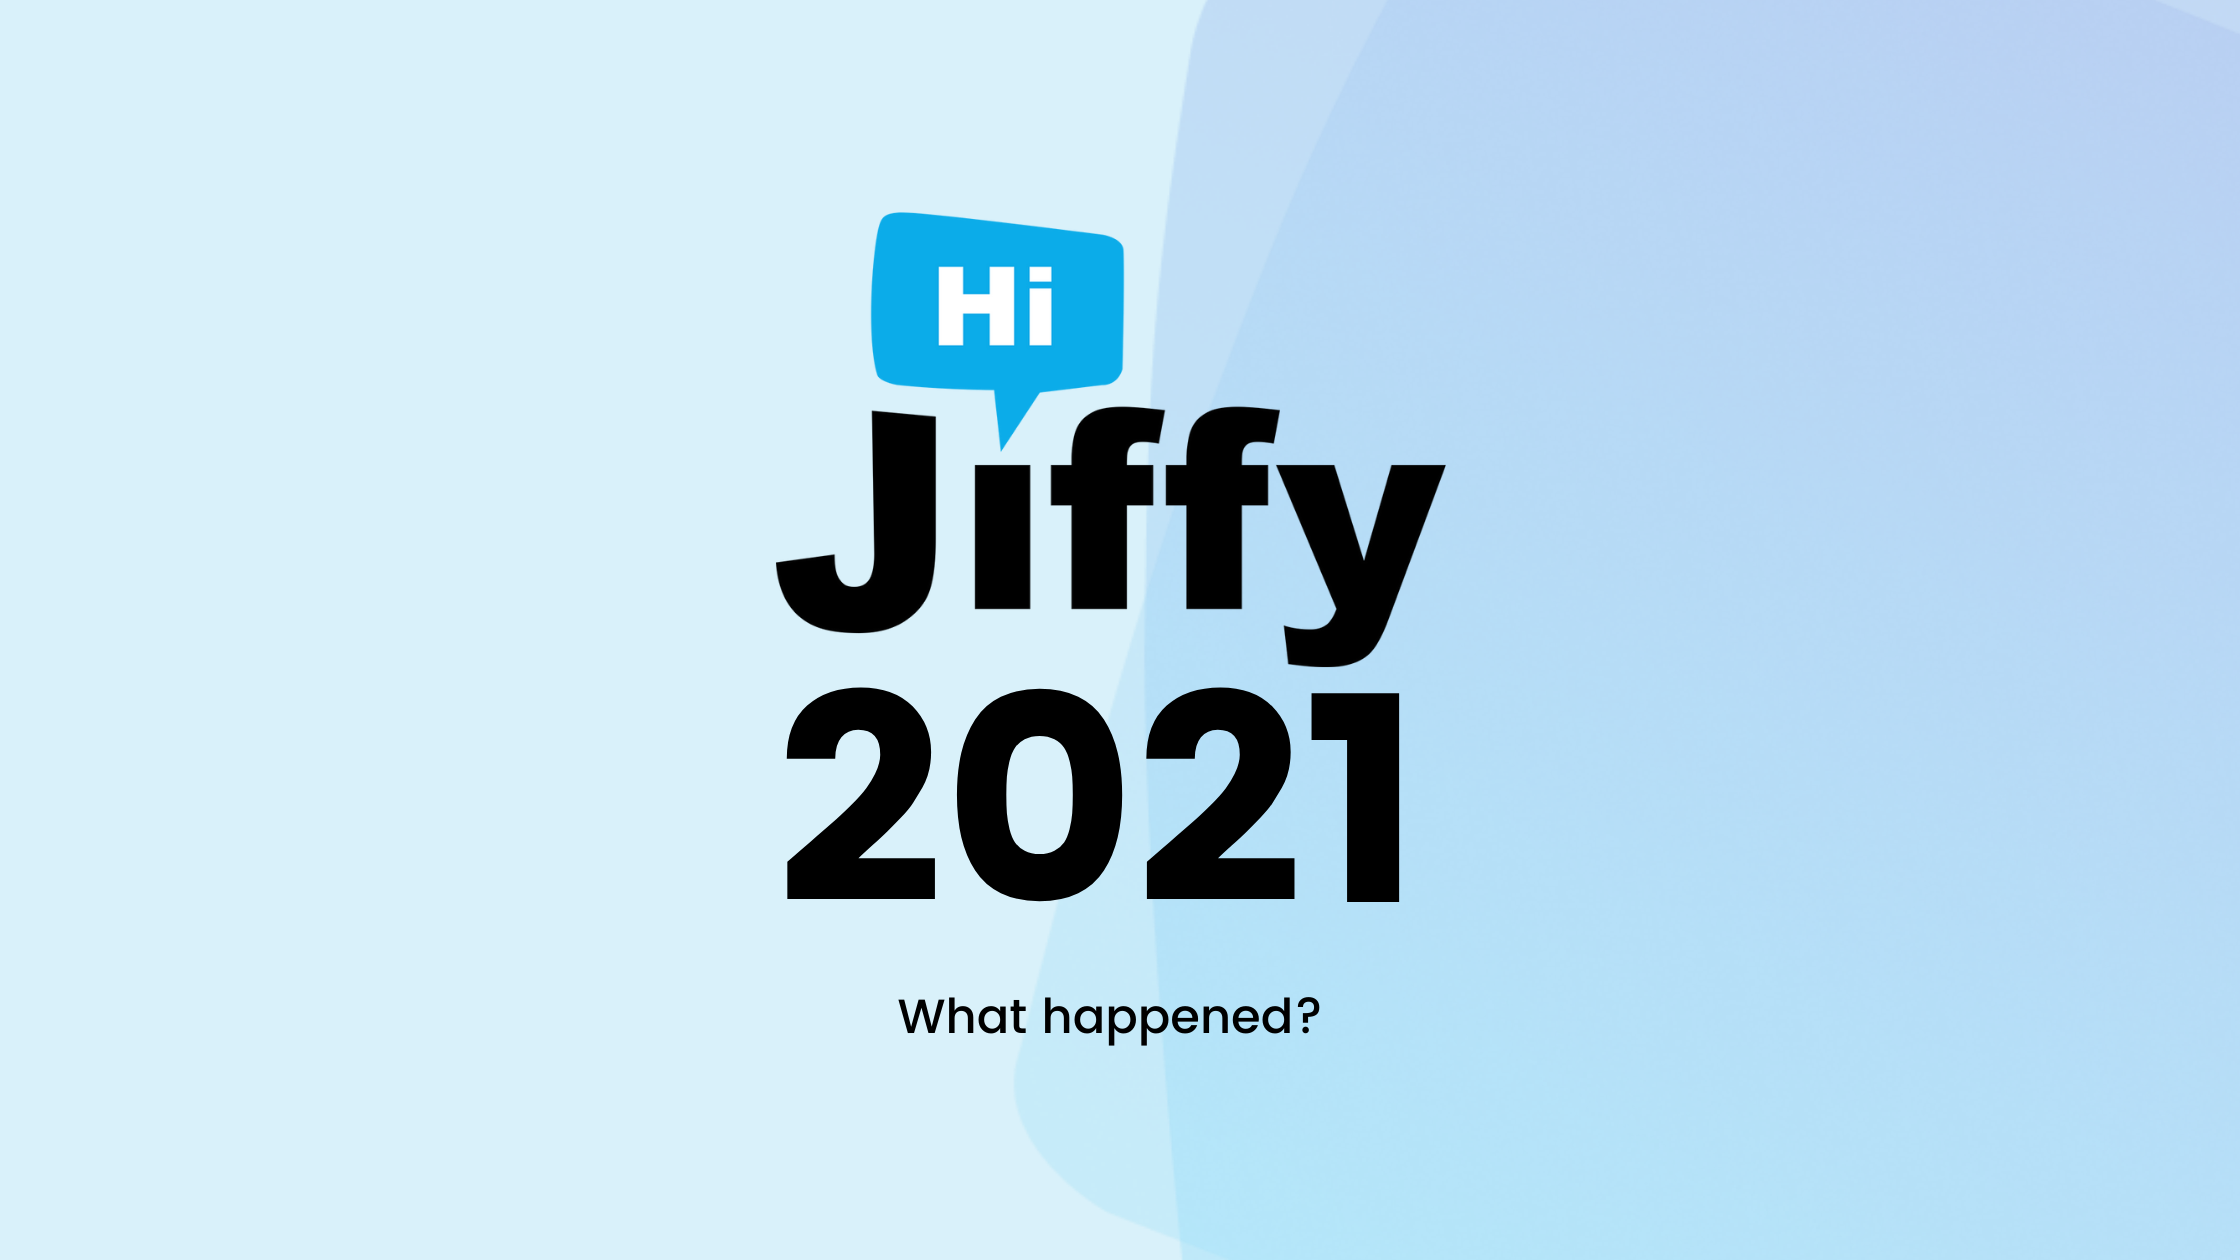 Hijiffy’s 2021 wrap up